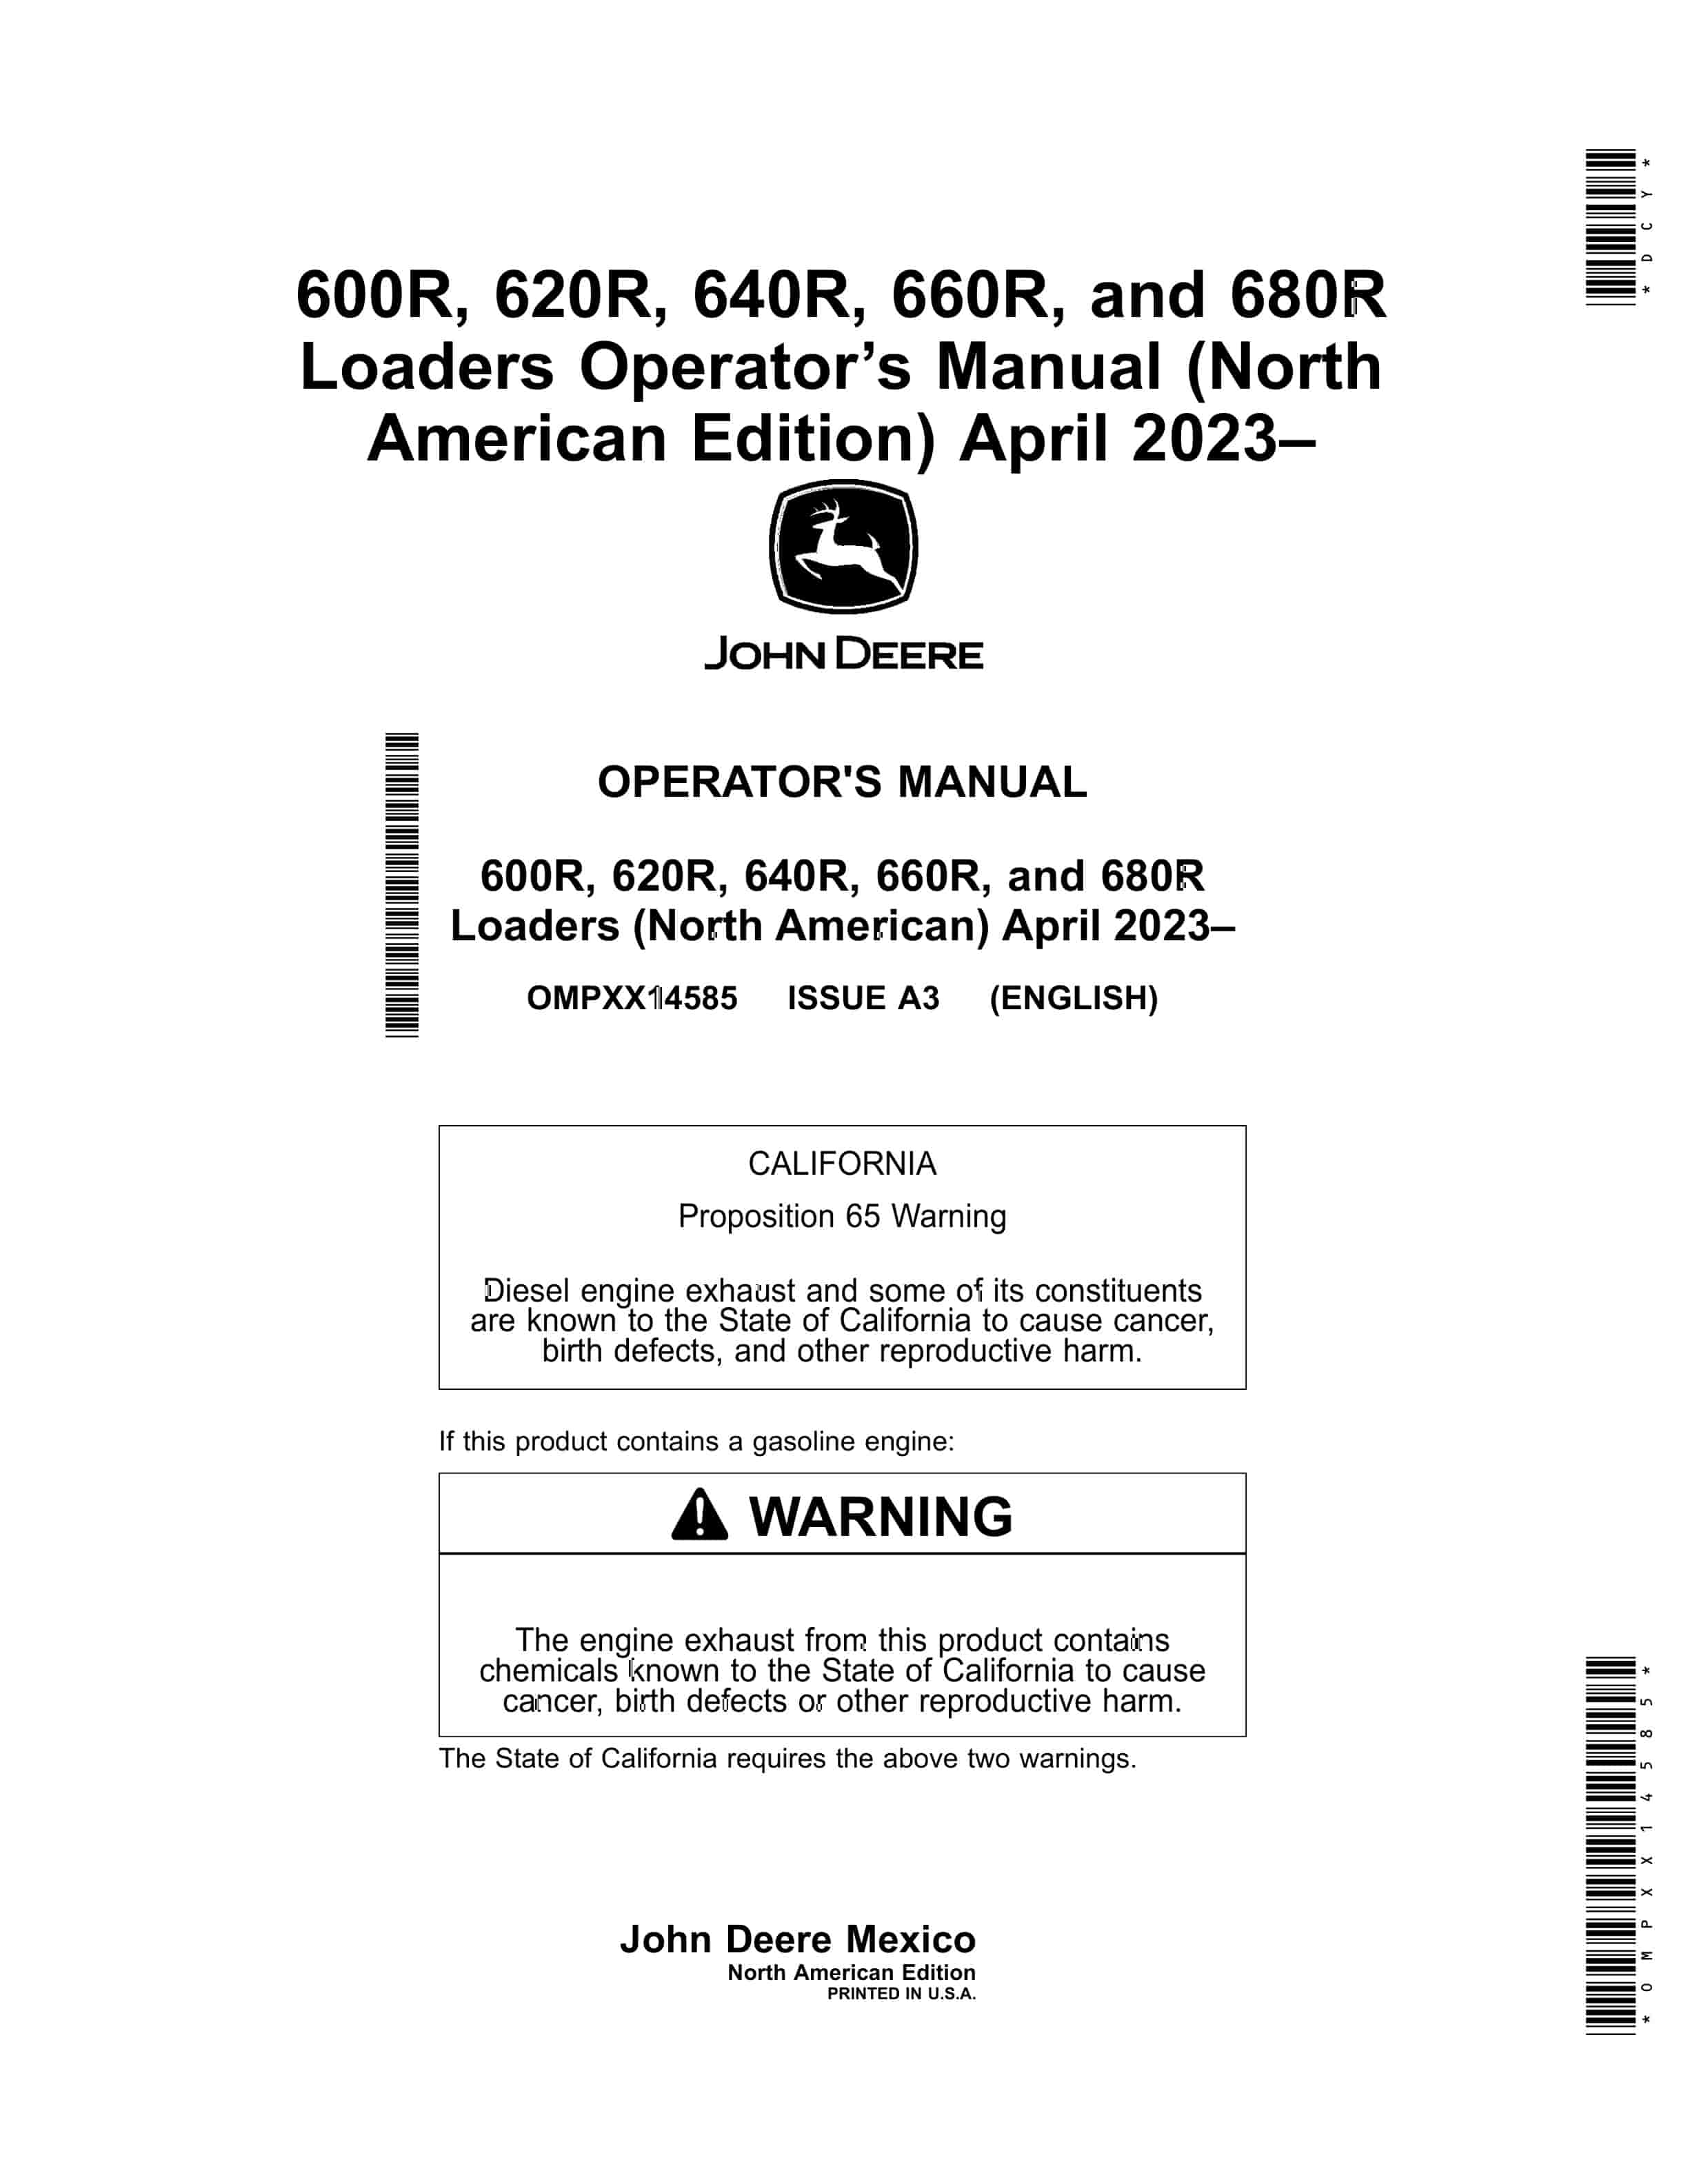 John Deere 600R 620R 640R 660R and 680R Loader Operator Manual OMPXX14585 1